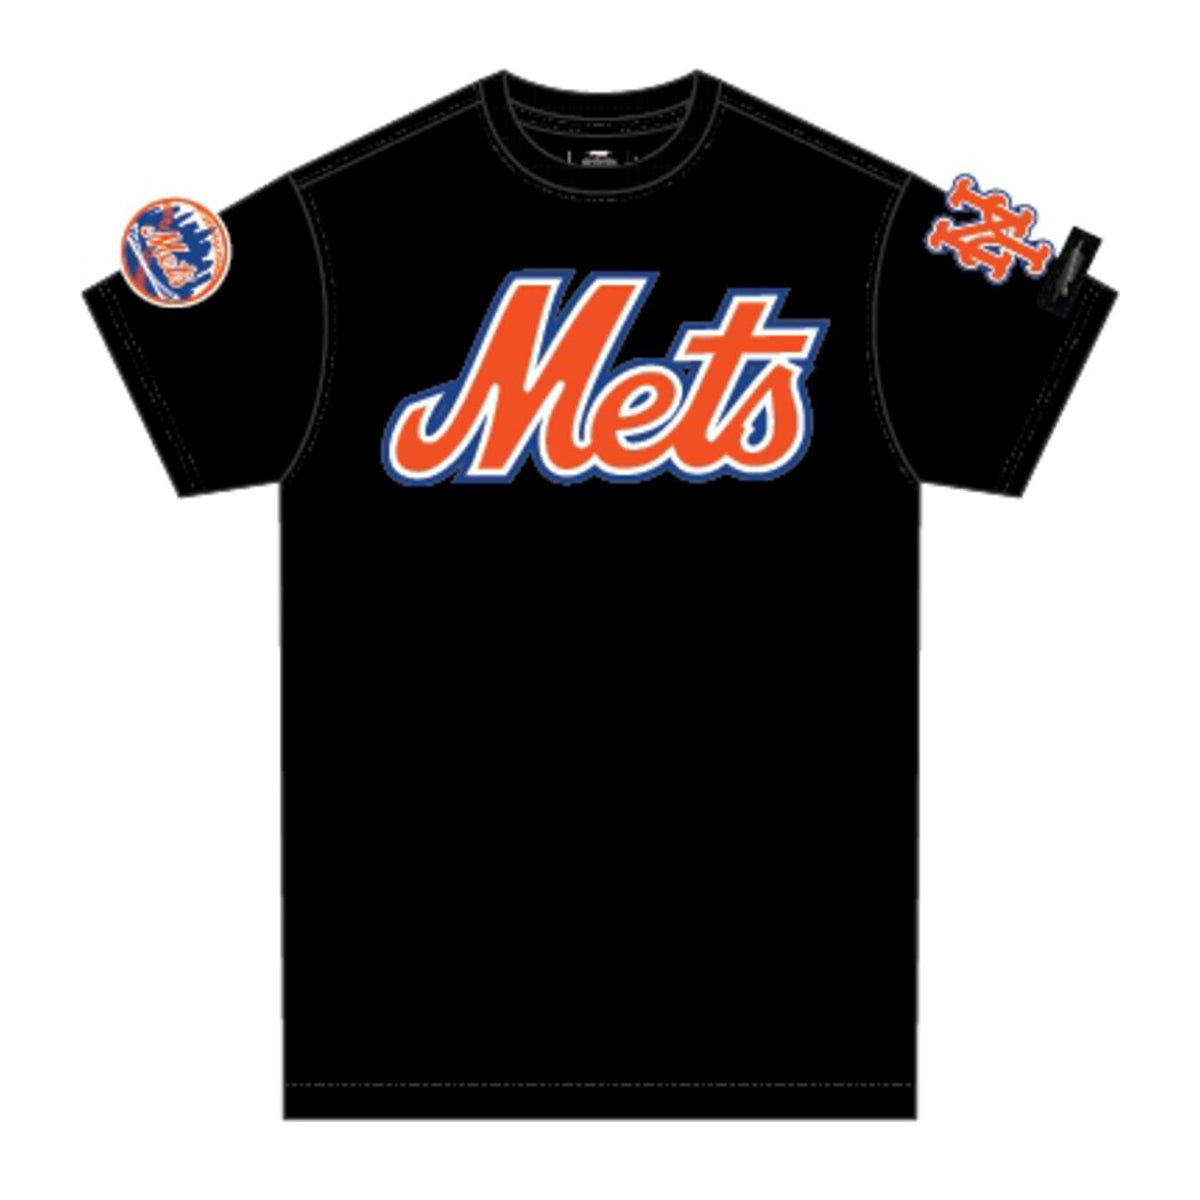 Men's Pro Standard Royal New York Mets Team T-Shirt Size: Small